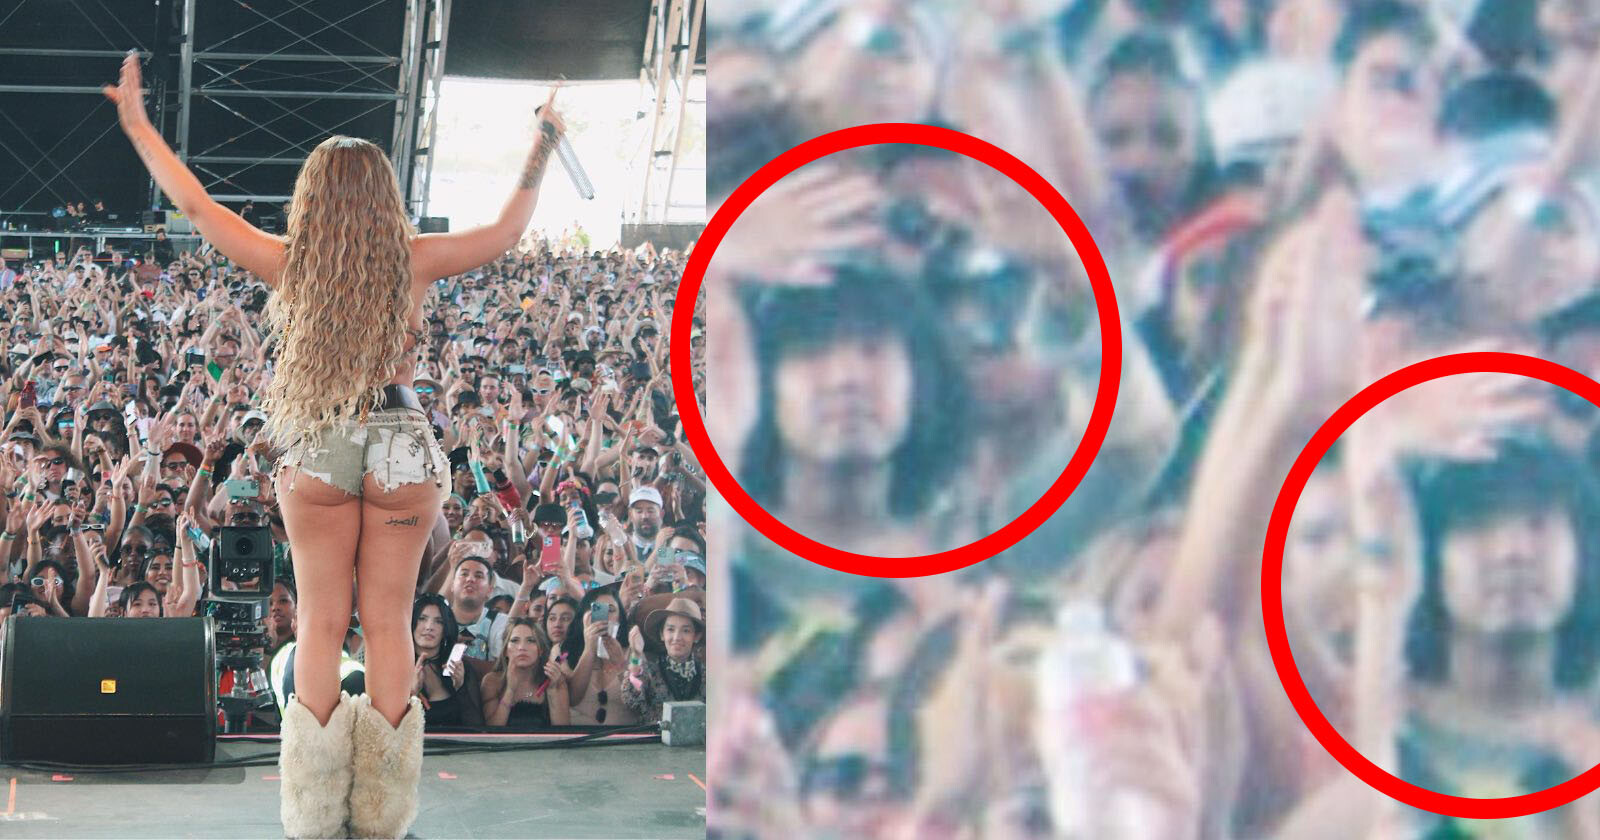 Rapper Latto Denies Photoshopping Coachella Photo to Make Crowd Bigger